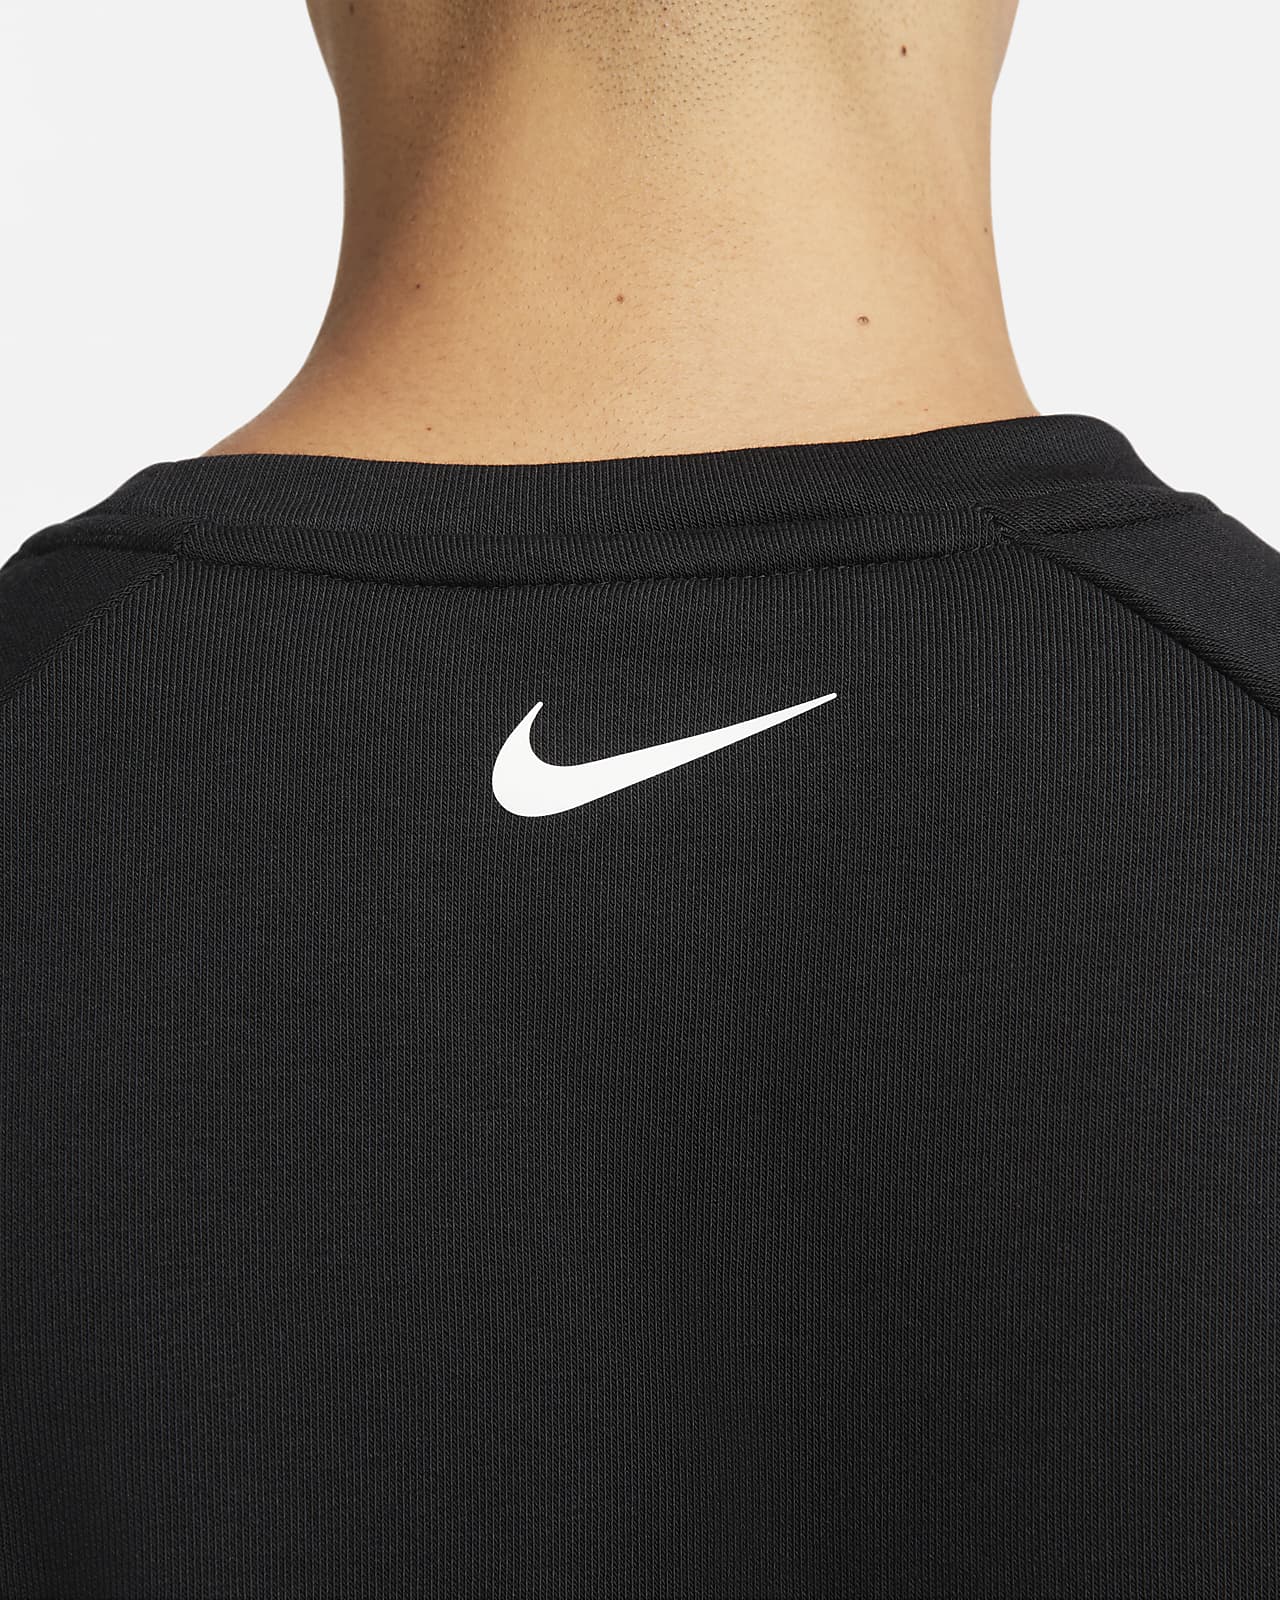 Nike Dri-FIT Long-Sleeve Fitness Top. Nike.com